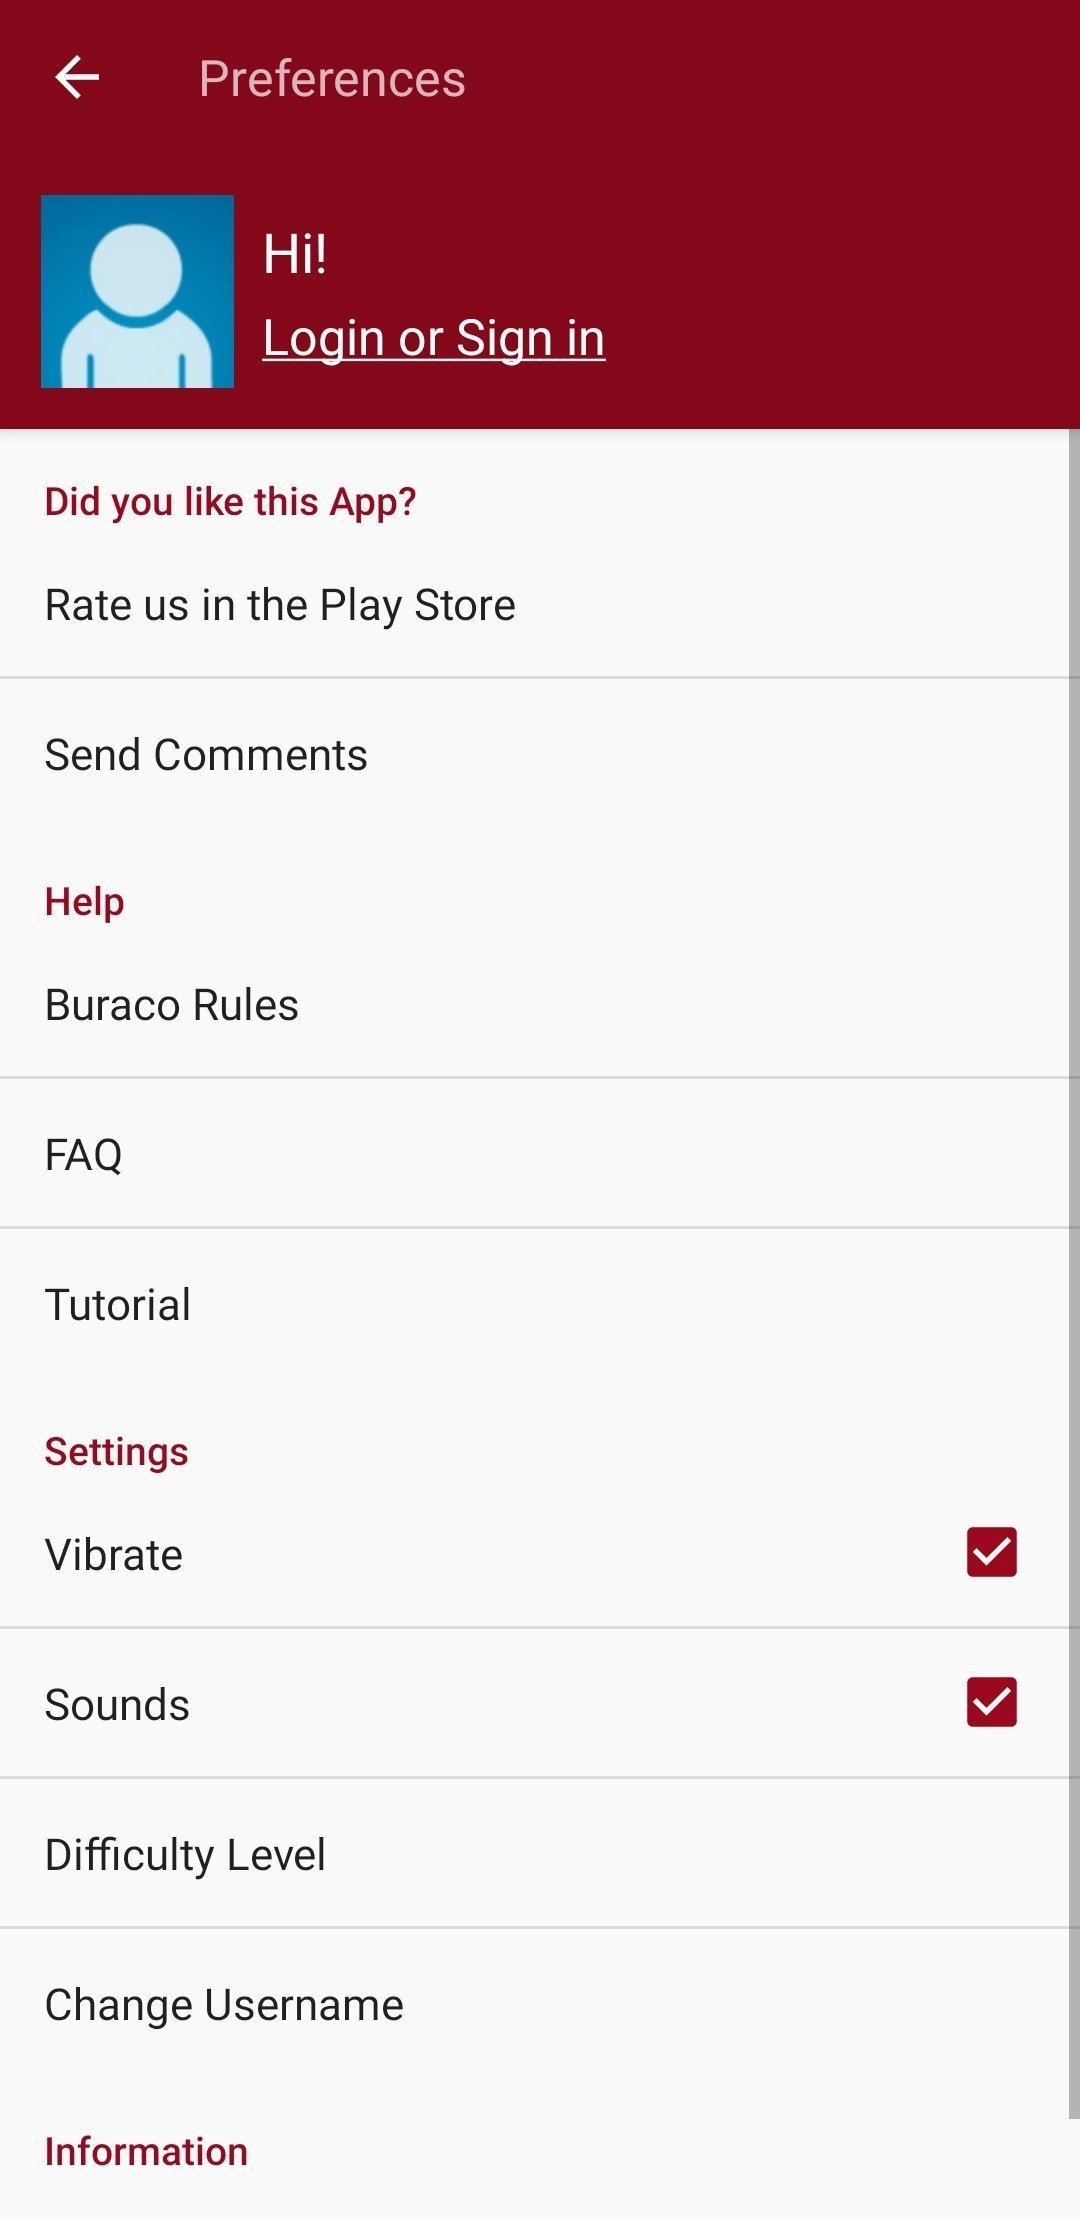 Buraco Jogos do Rei APK for Android Download